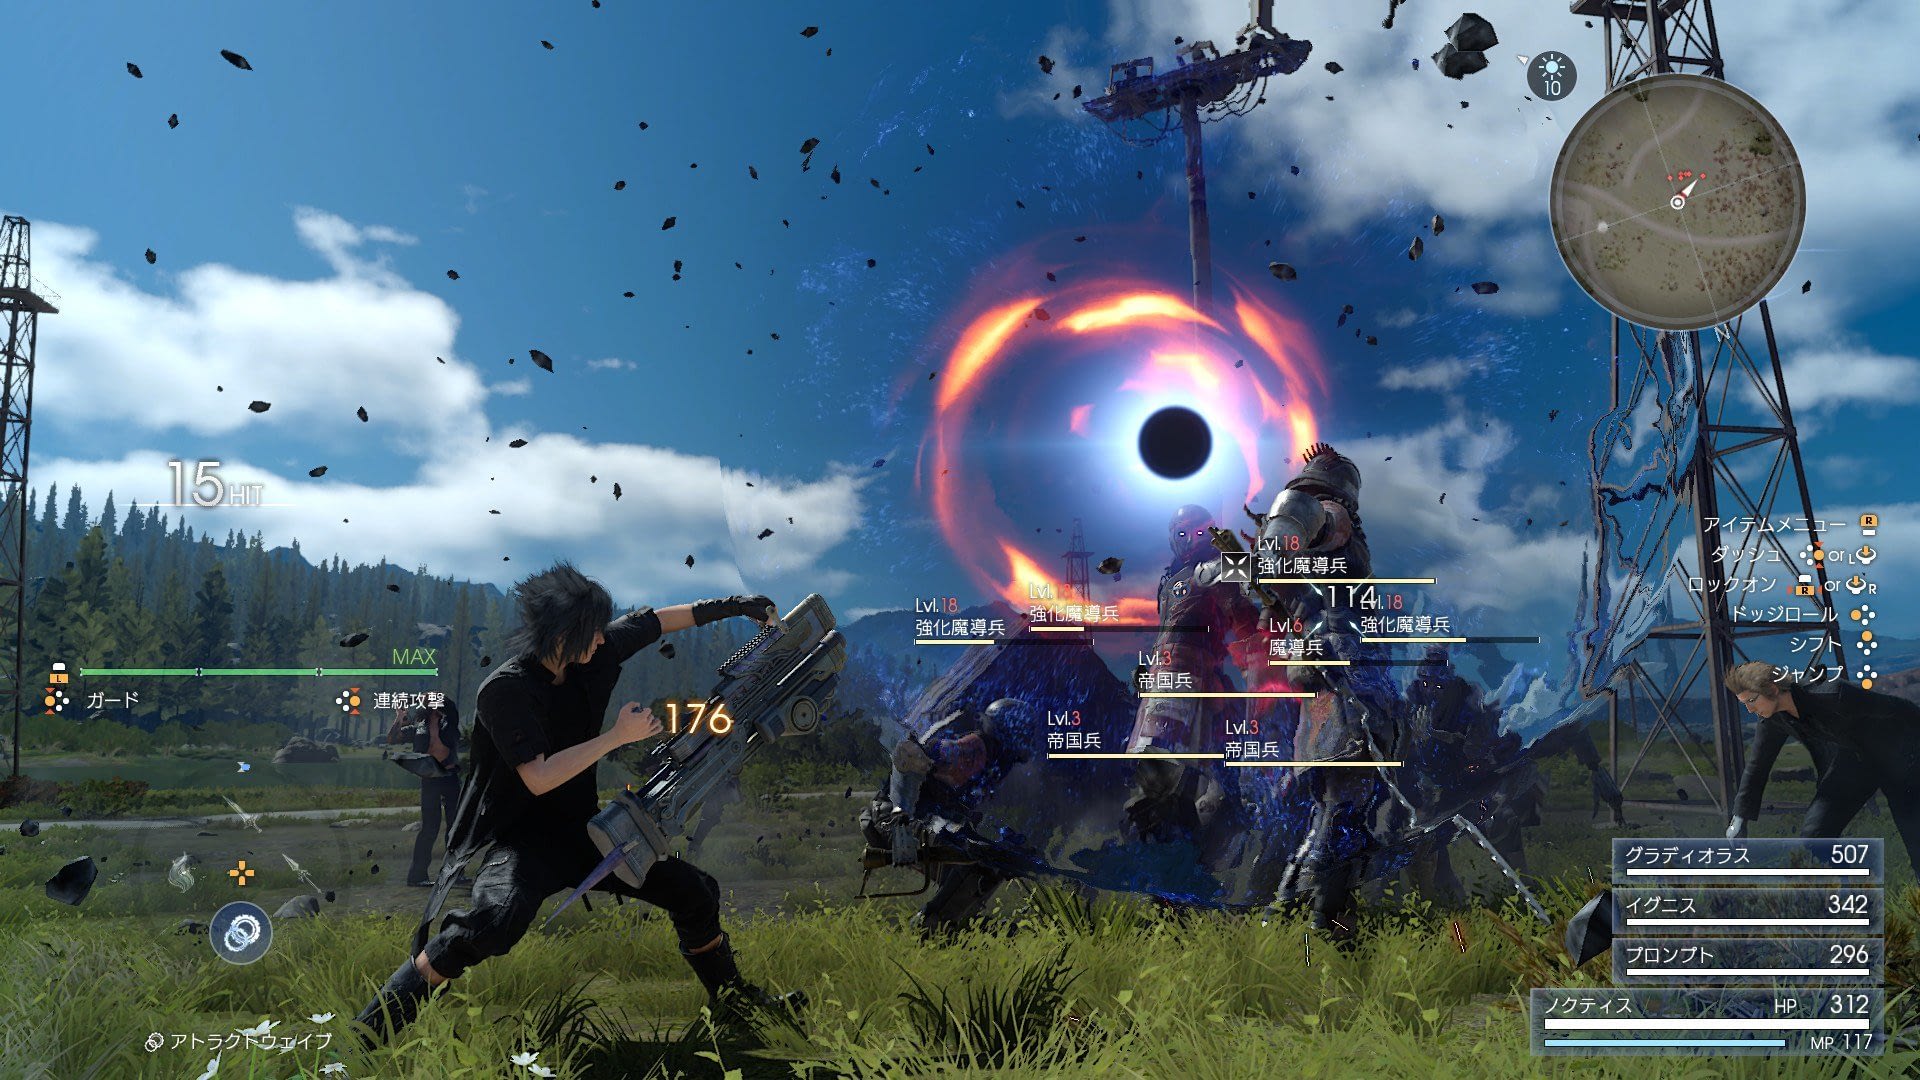 New Final Fantasy XV screenshots show off guns as playable weapons